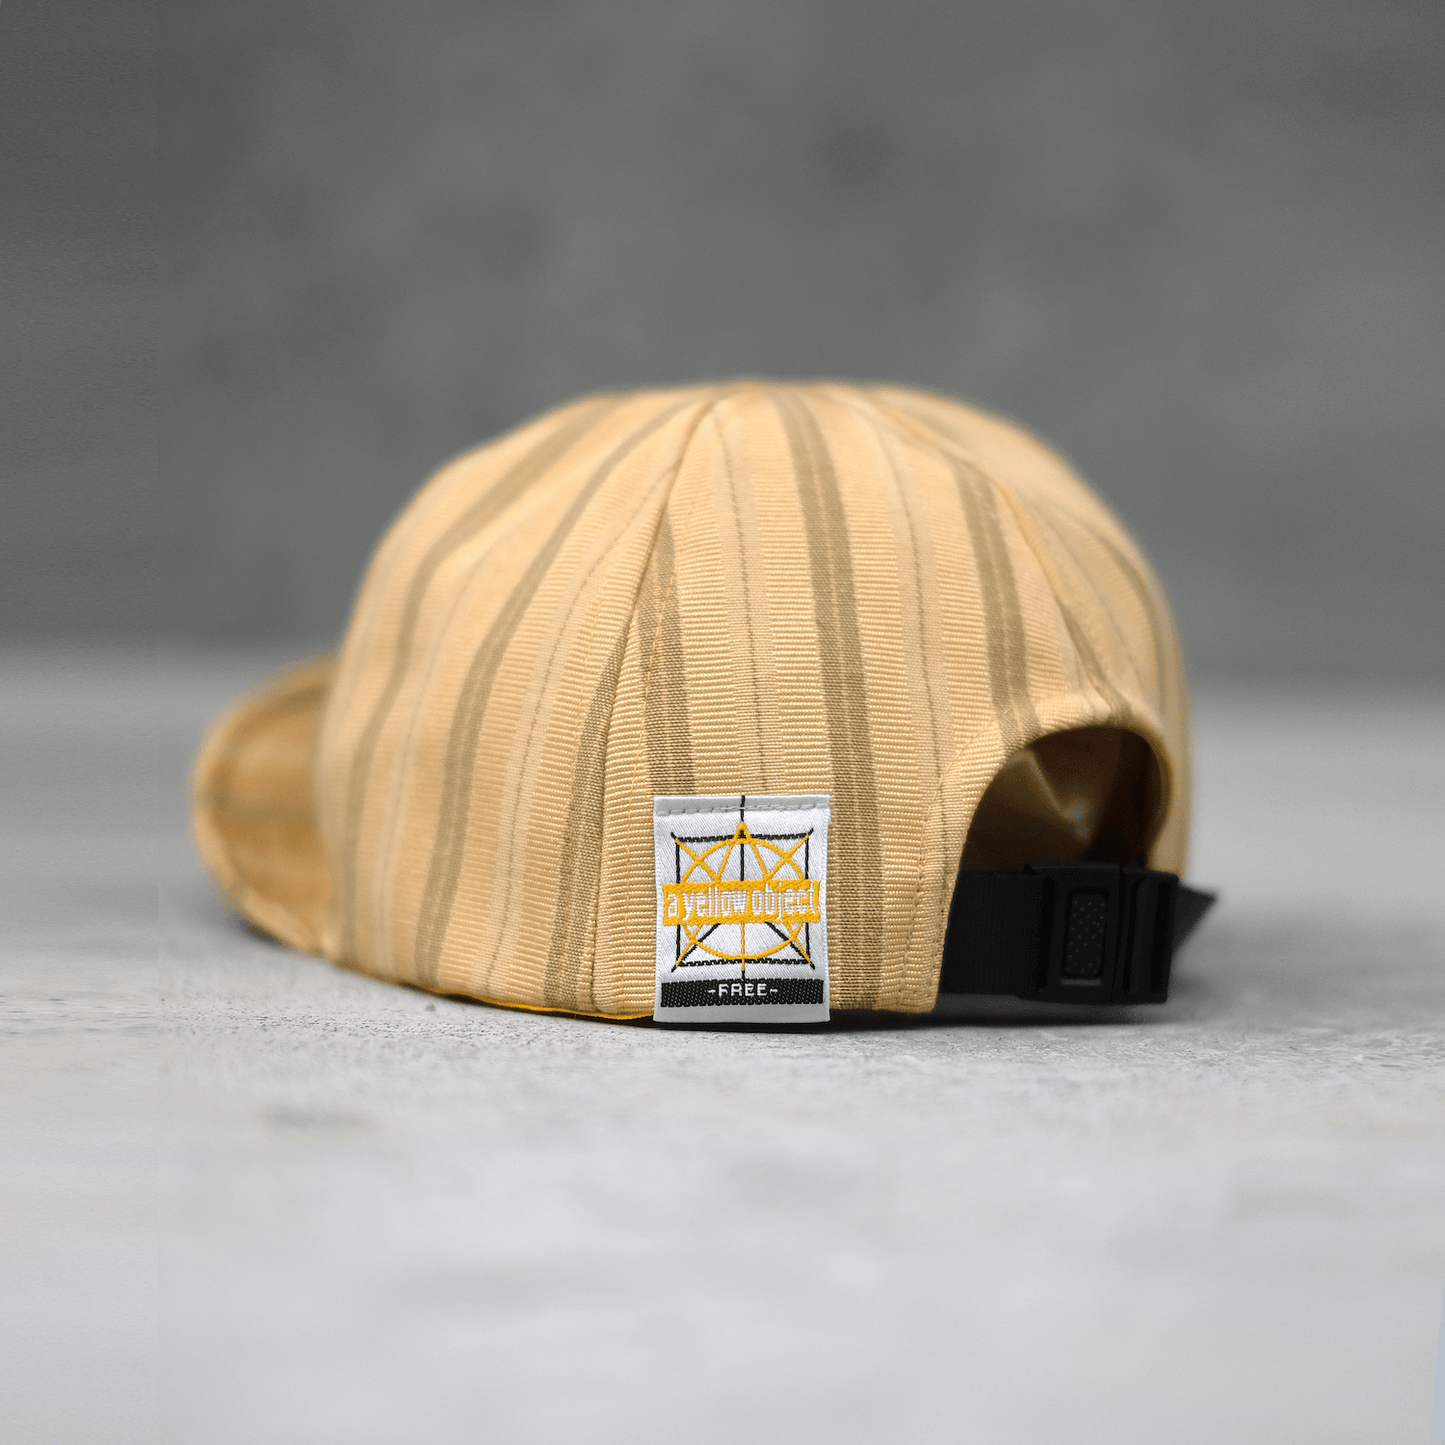 Just A Cap (Sai Gwaa Bo) - a yellow object